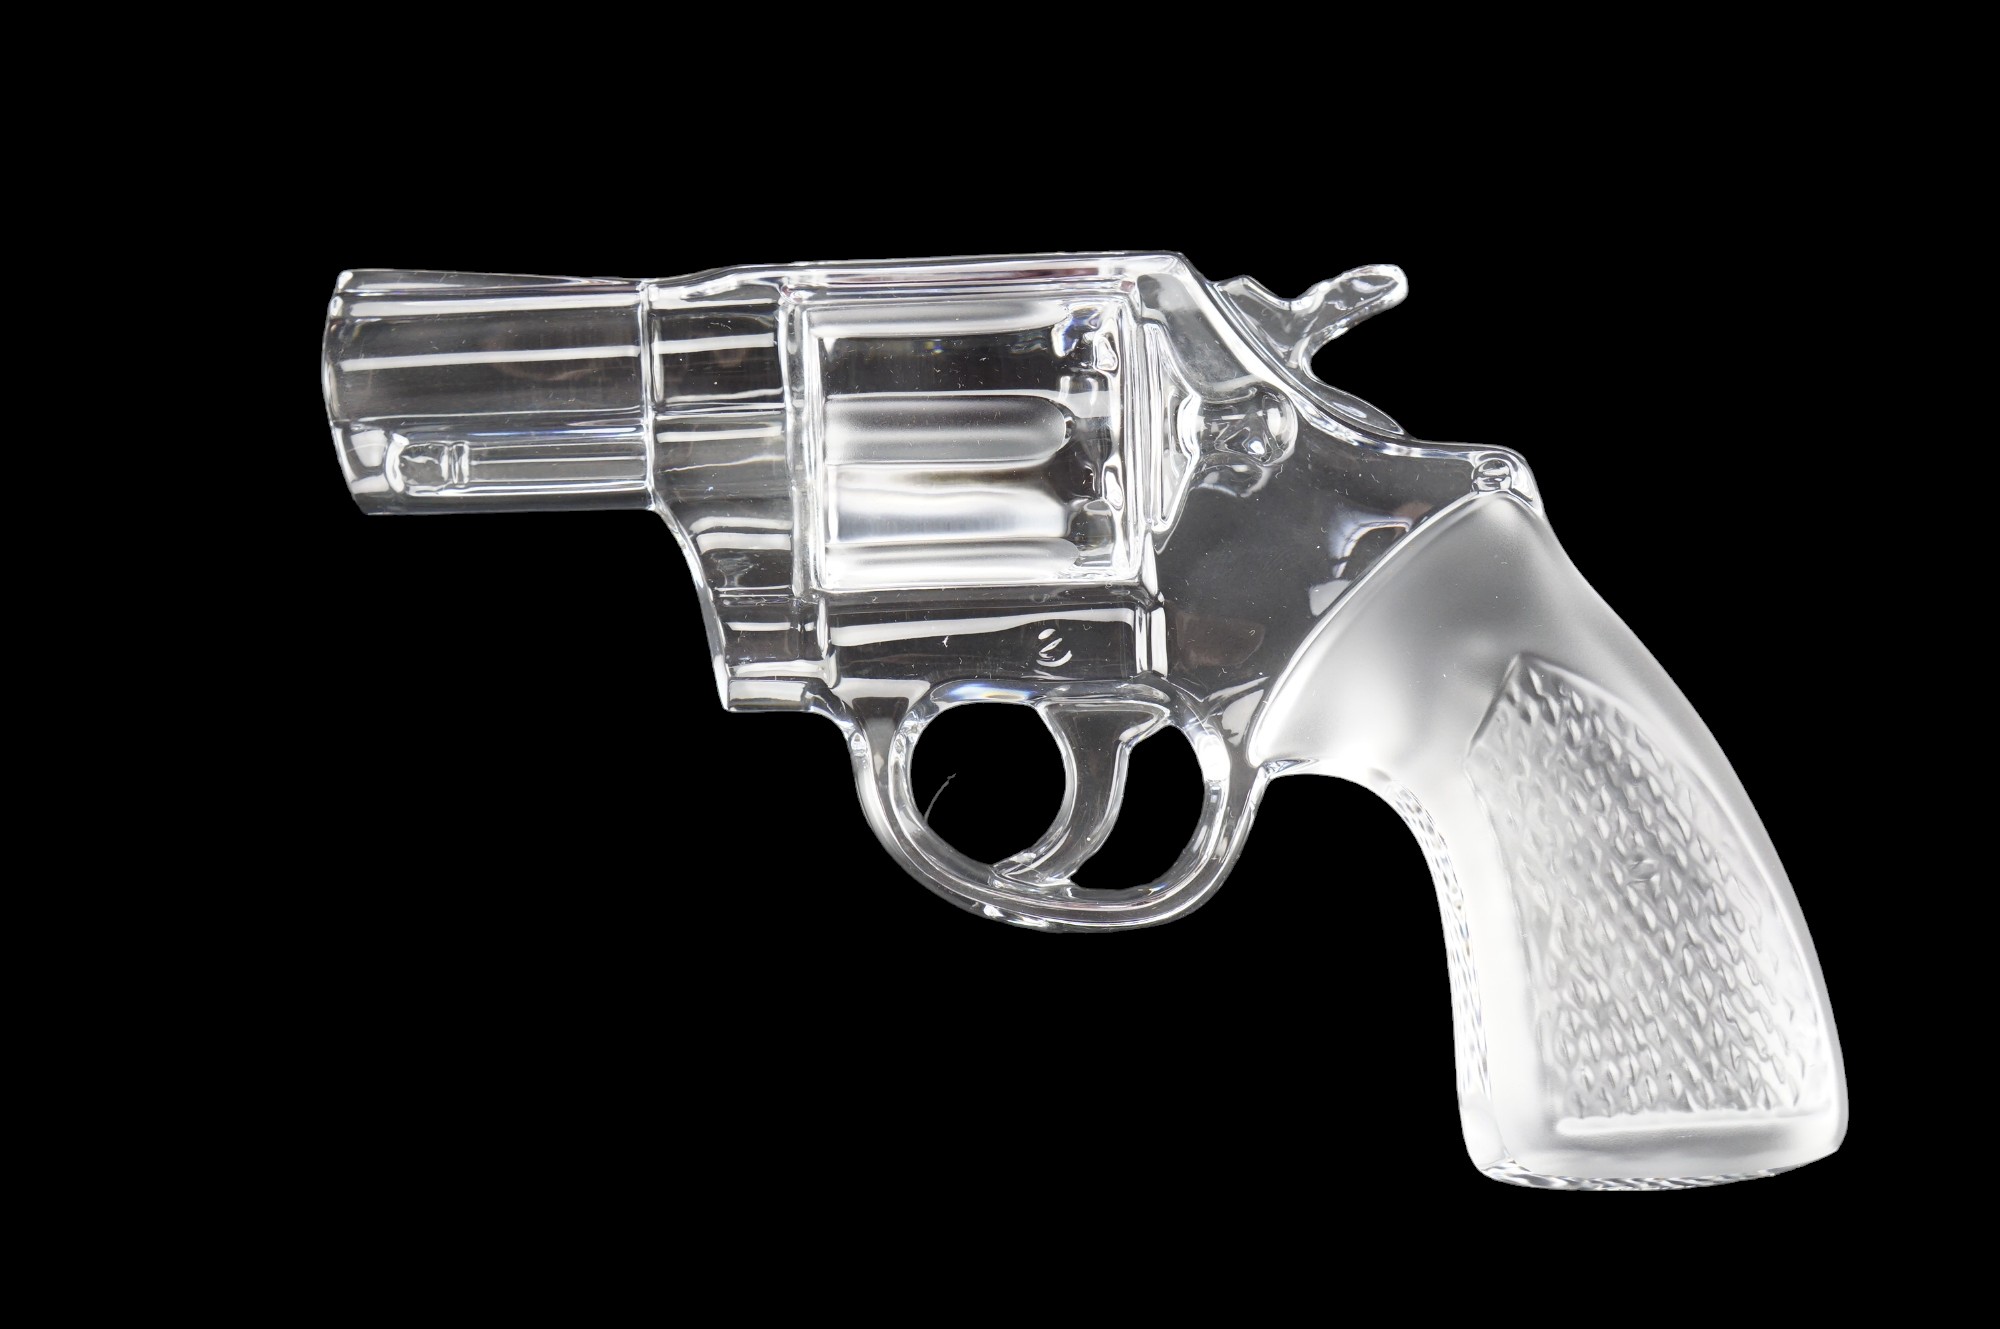 A boxed Royales De Champagne Les Armes snub-nose Smith & Wesson or similar revolver, gun 19.5 cm - Image 3 of 4